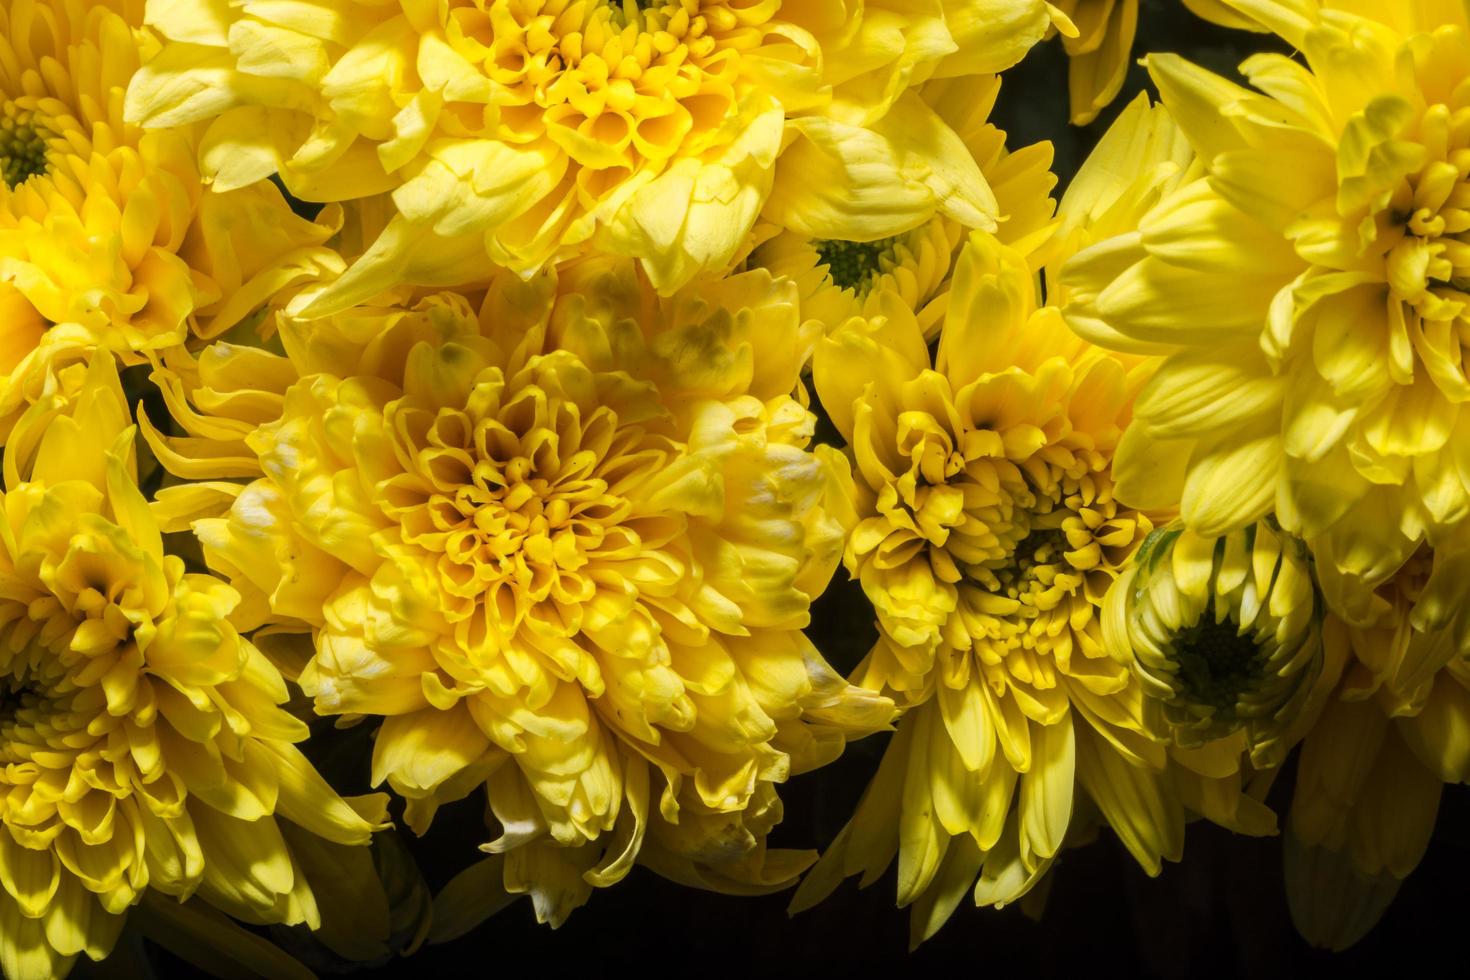 flor de crisantemo amarillo foto